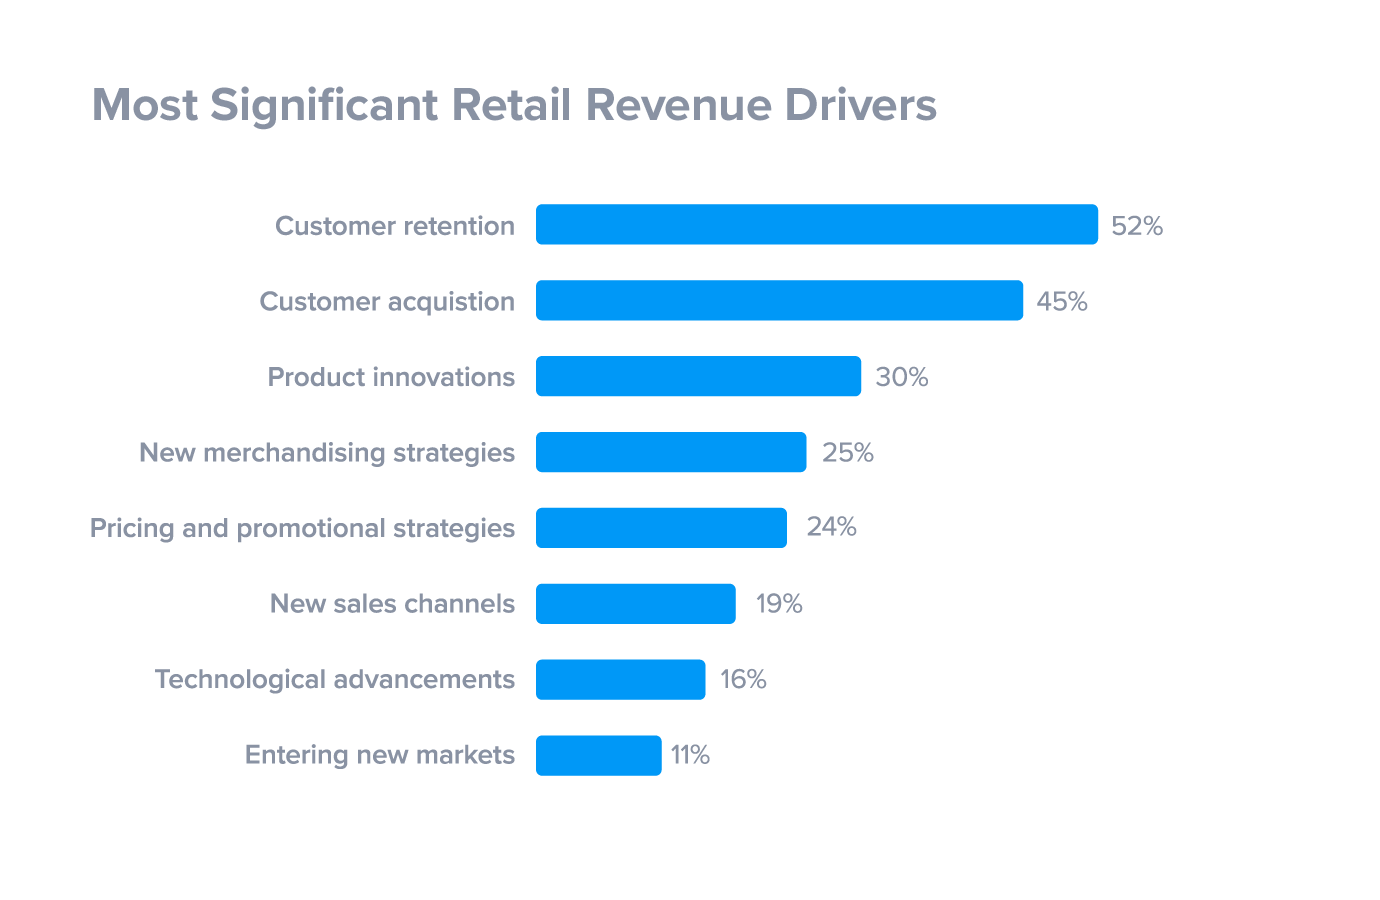 Customer retention as a significant revenue driver